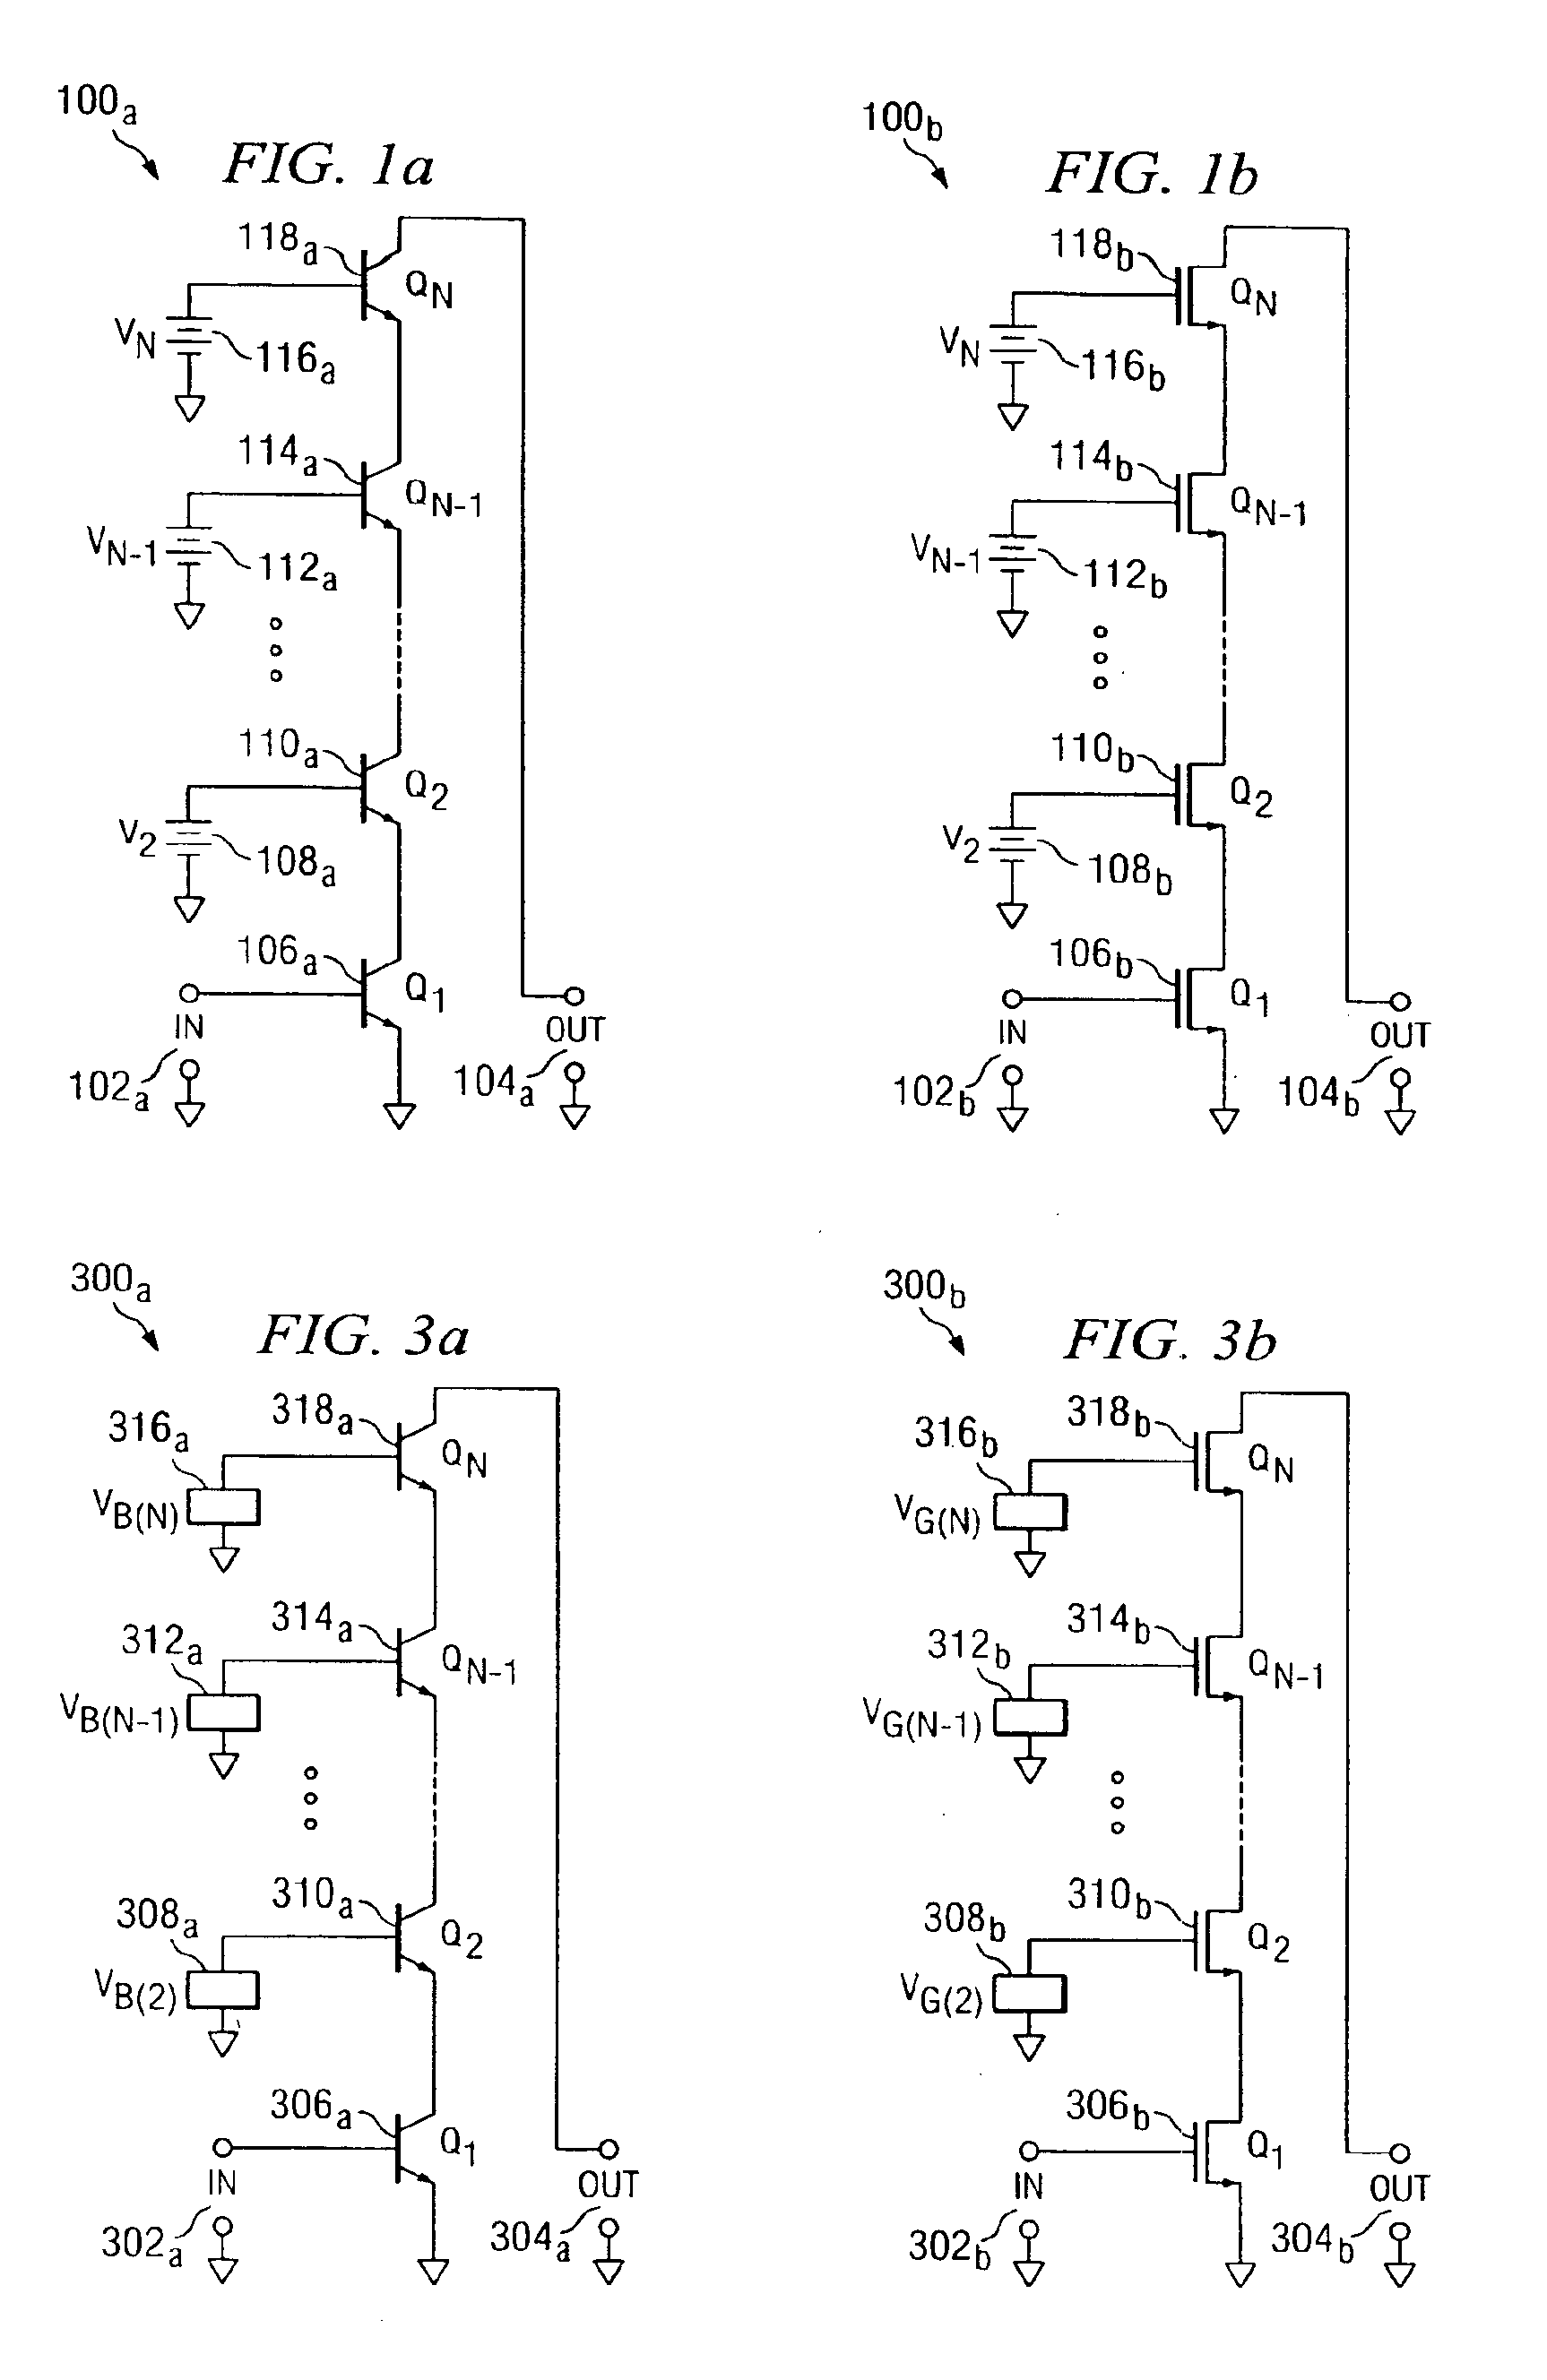 Multi-cascode transistors